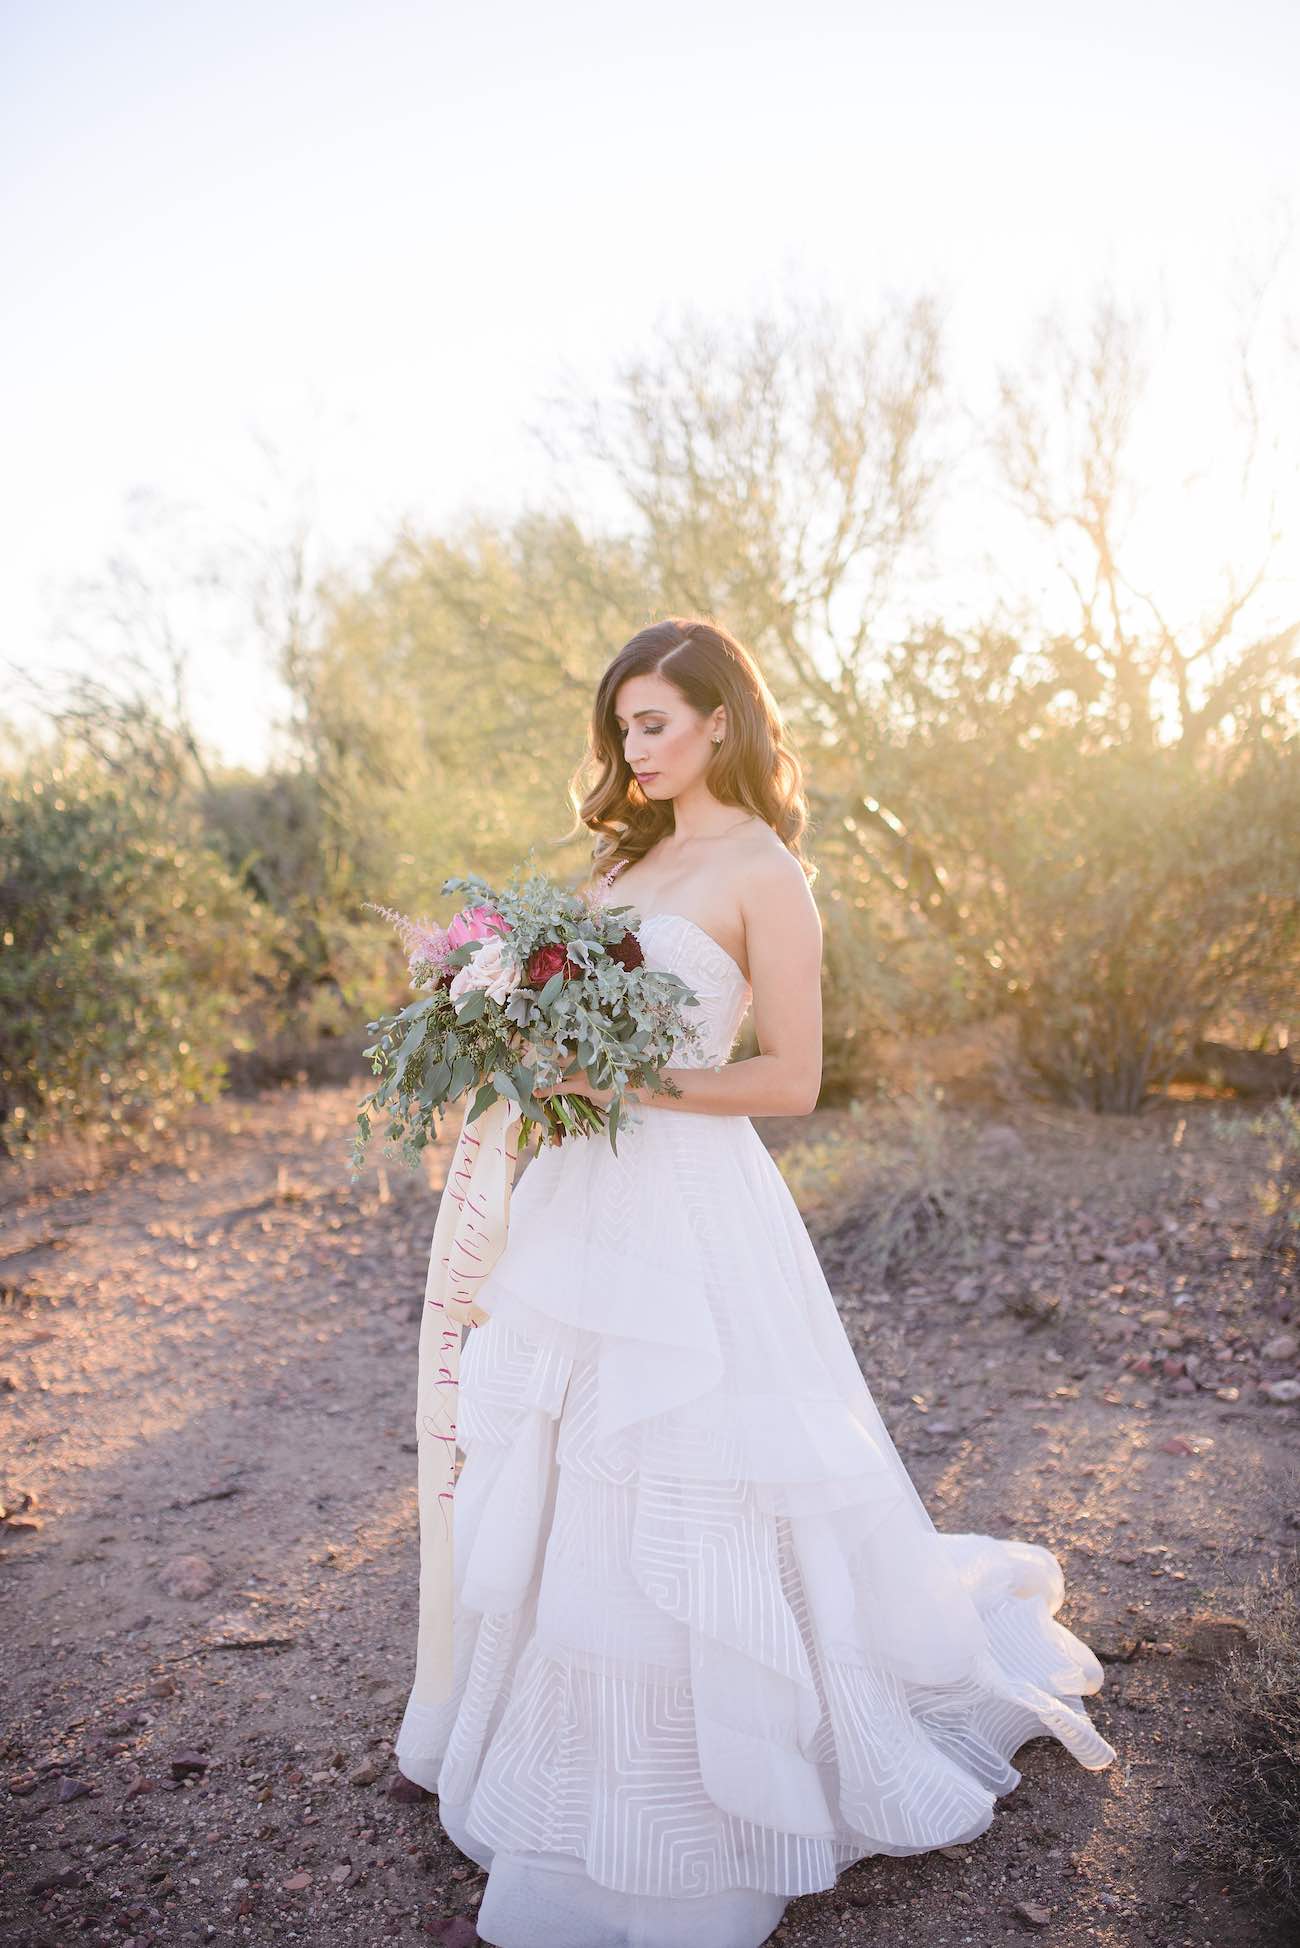 Berry Blush Desert Wedding - Marisa Belle photography